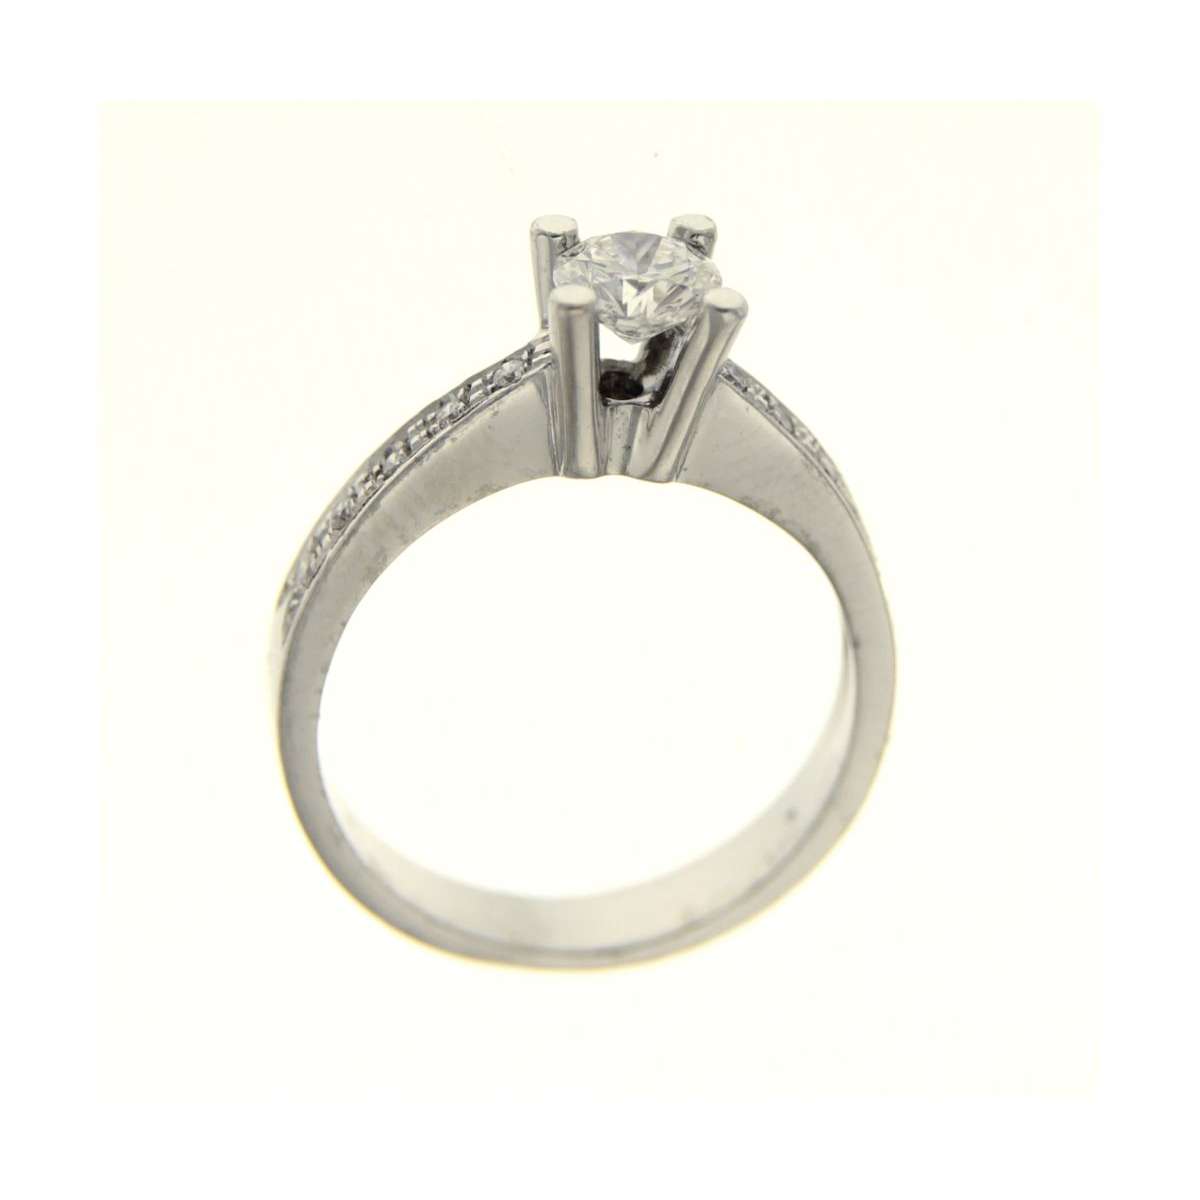 Central diamond solitaire ring GIA certified ct 0.50 F-VS2 plus side diamonds ct 0.10 G-VS1